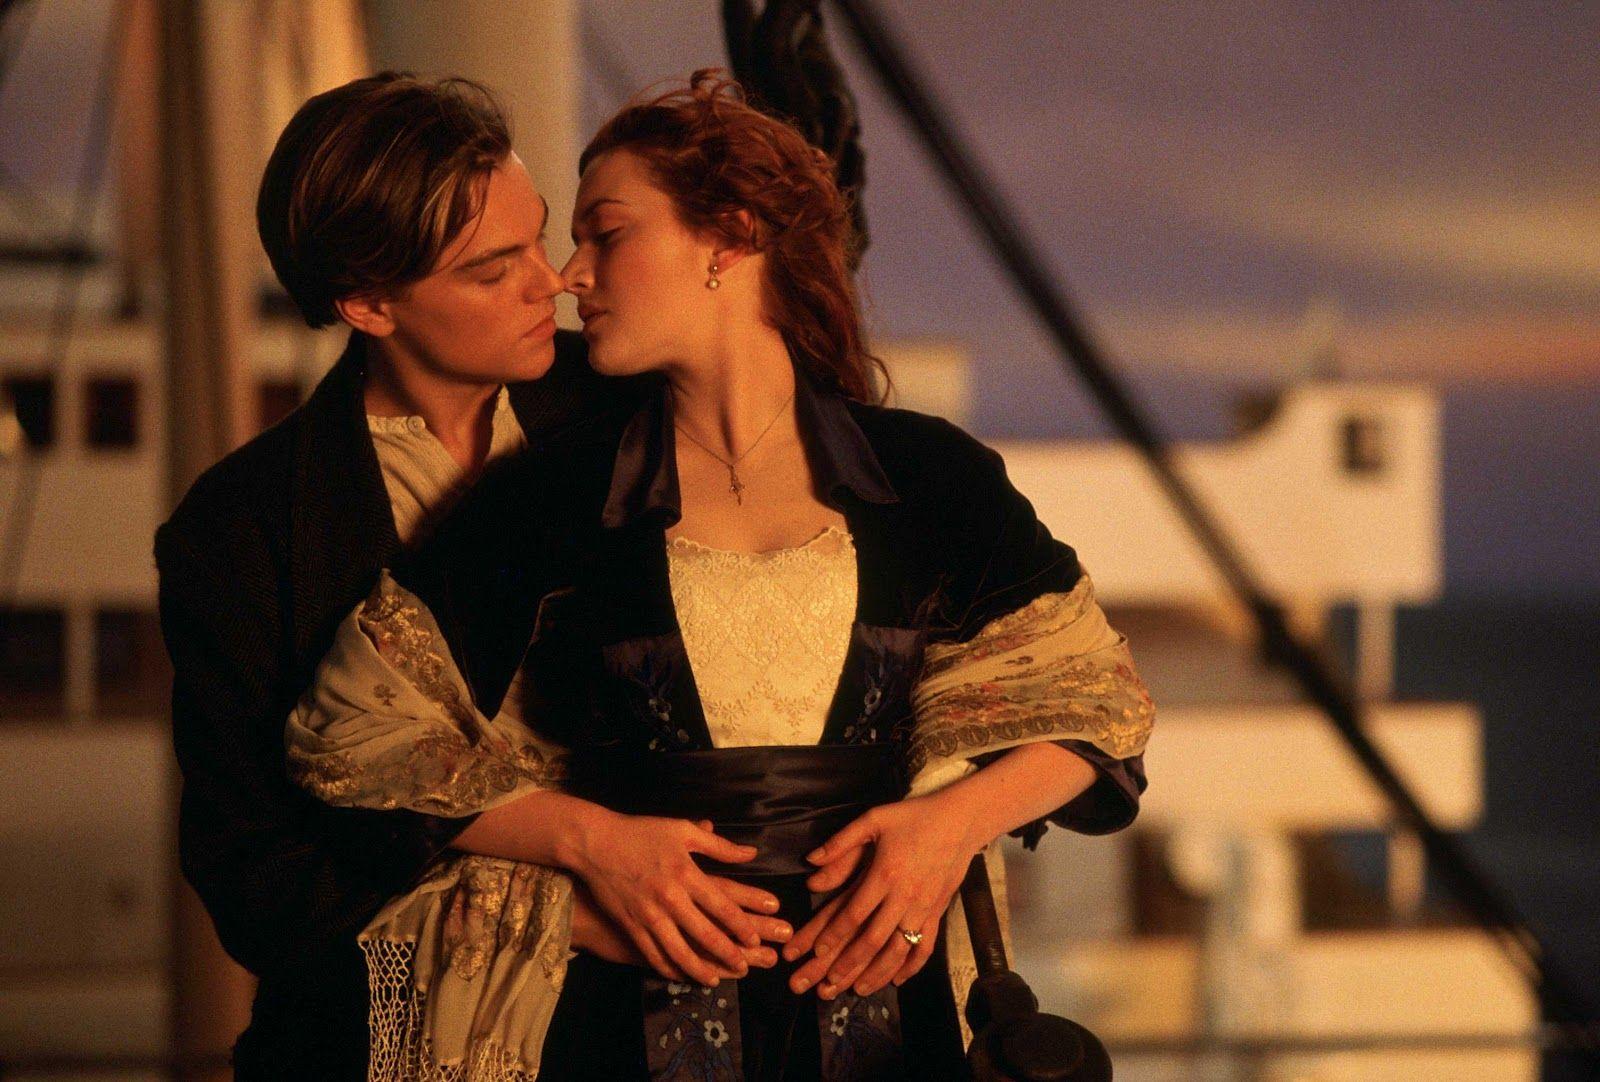 Jack and. James Cameron's Titanic